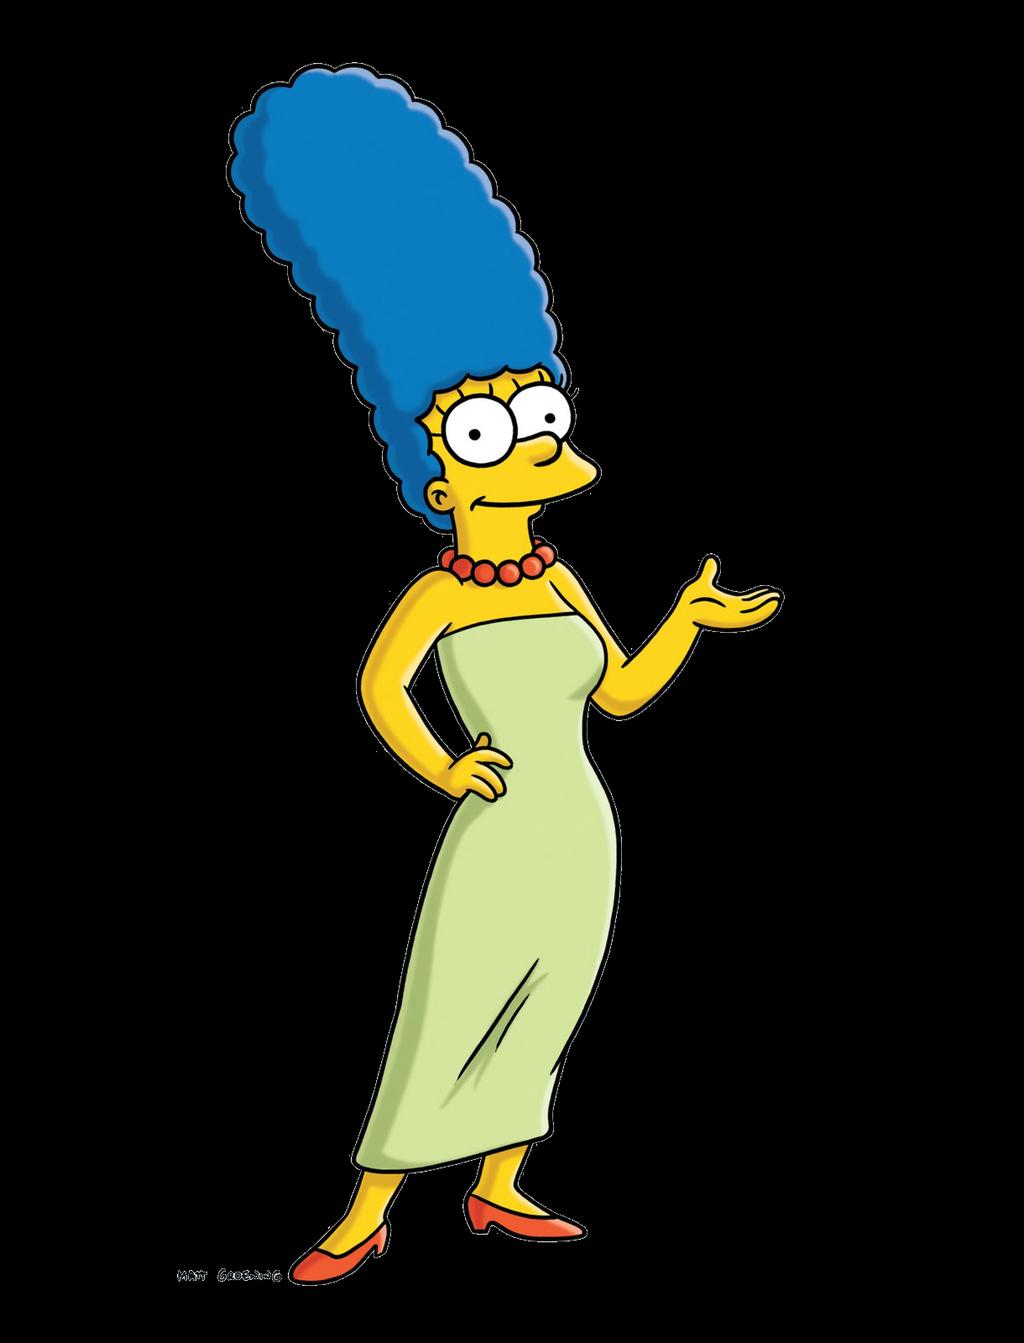 (a) Marge (b) Burt (c) Homer (d) Lisa Figura 2.